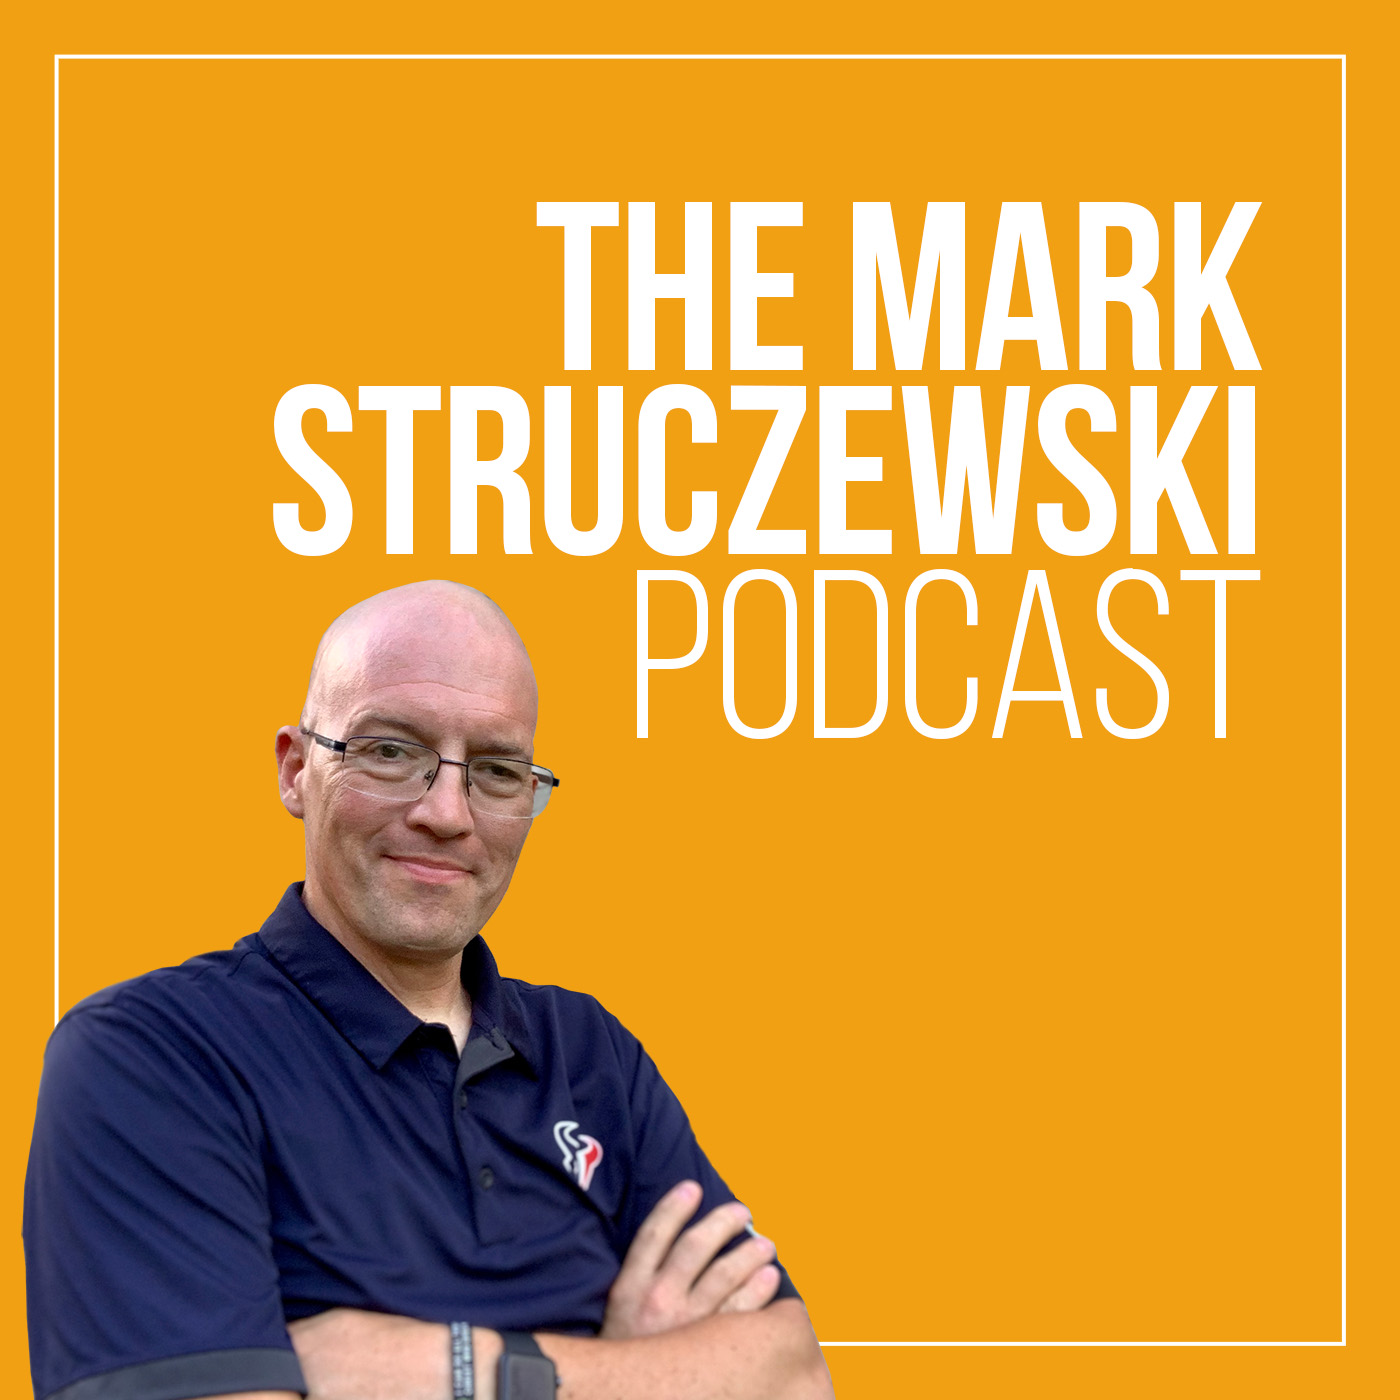 The Mark Struczewski Podcast